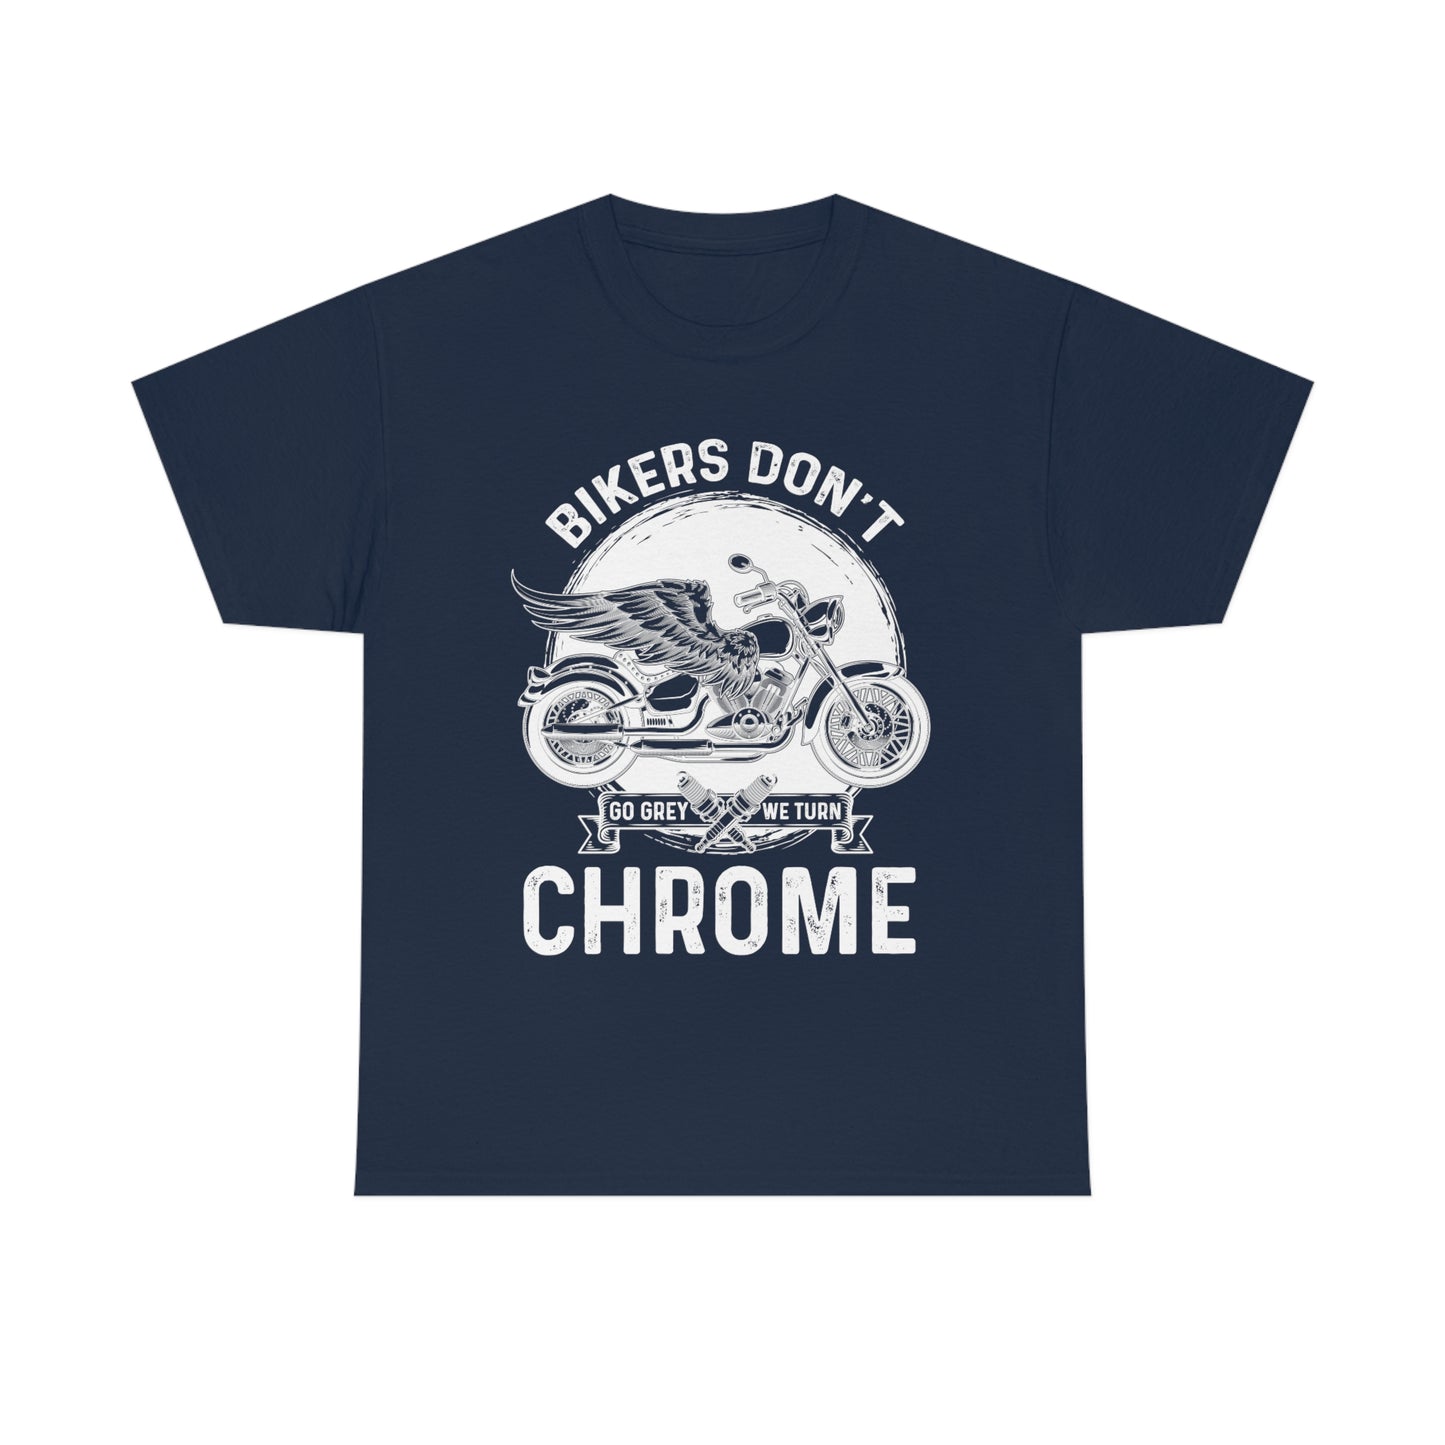 Motorrad-T-Shirt – Bikers Don't Go Grey, We Turn Chrome, Harley Biker Club Shirt